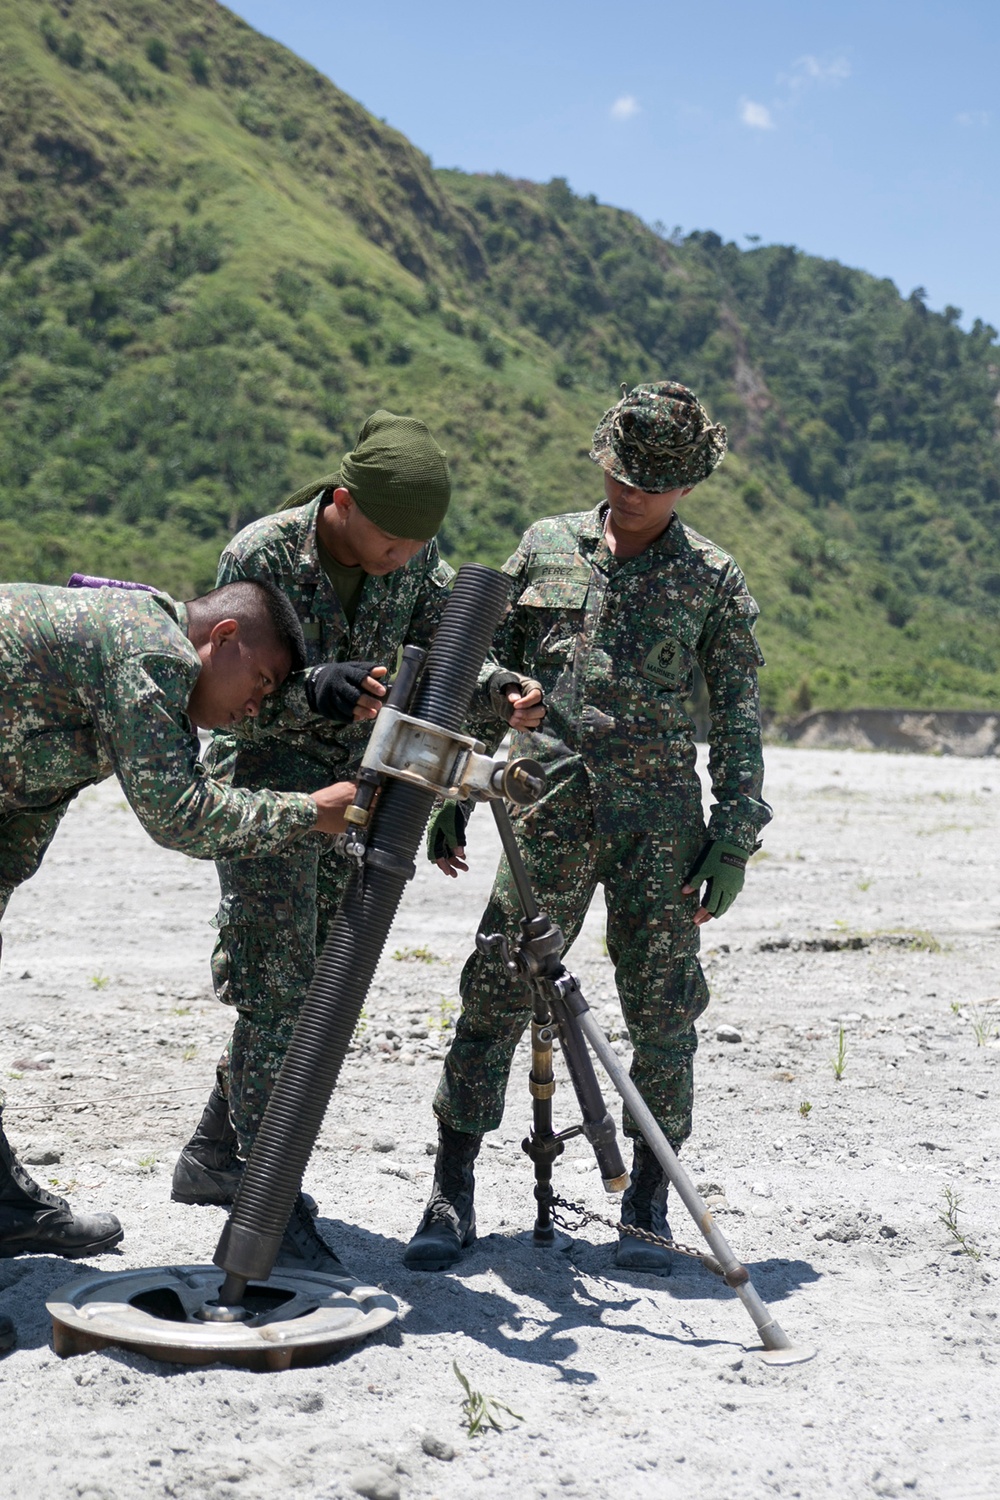 Launching Balikatan 2014 with basic mortar training